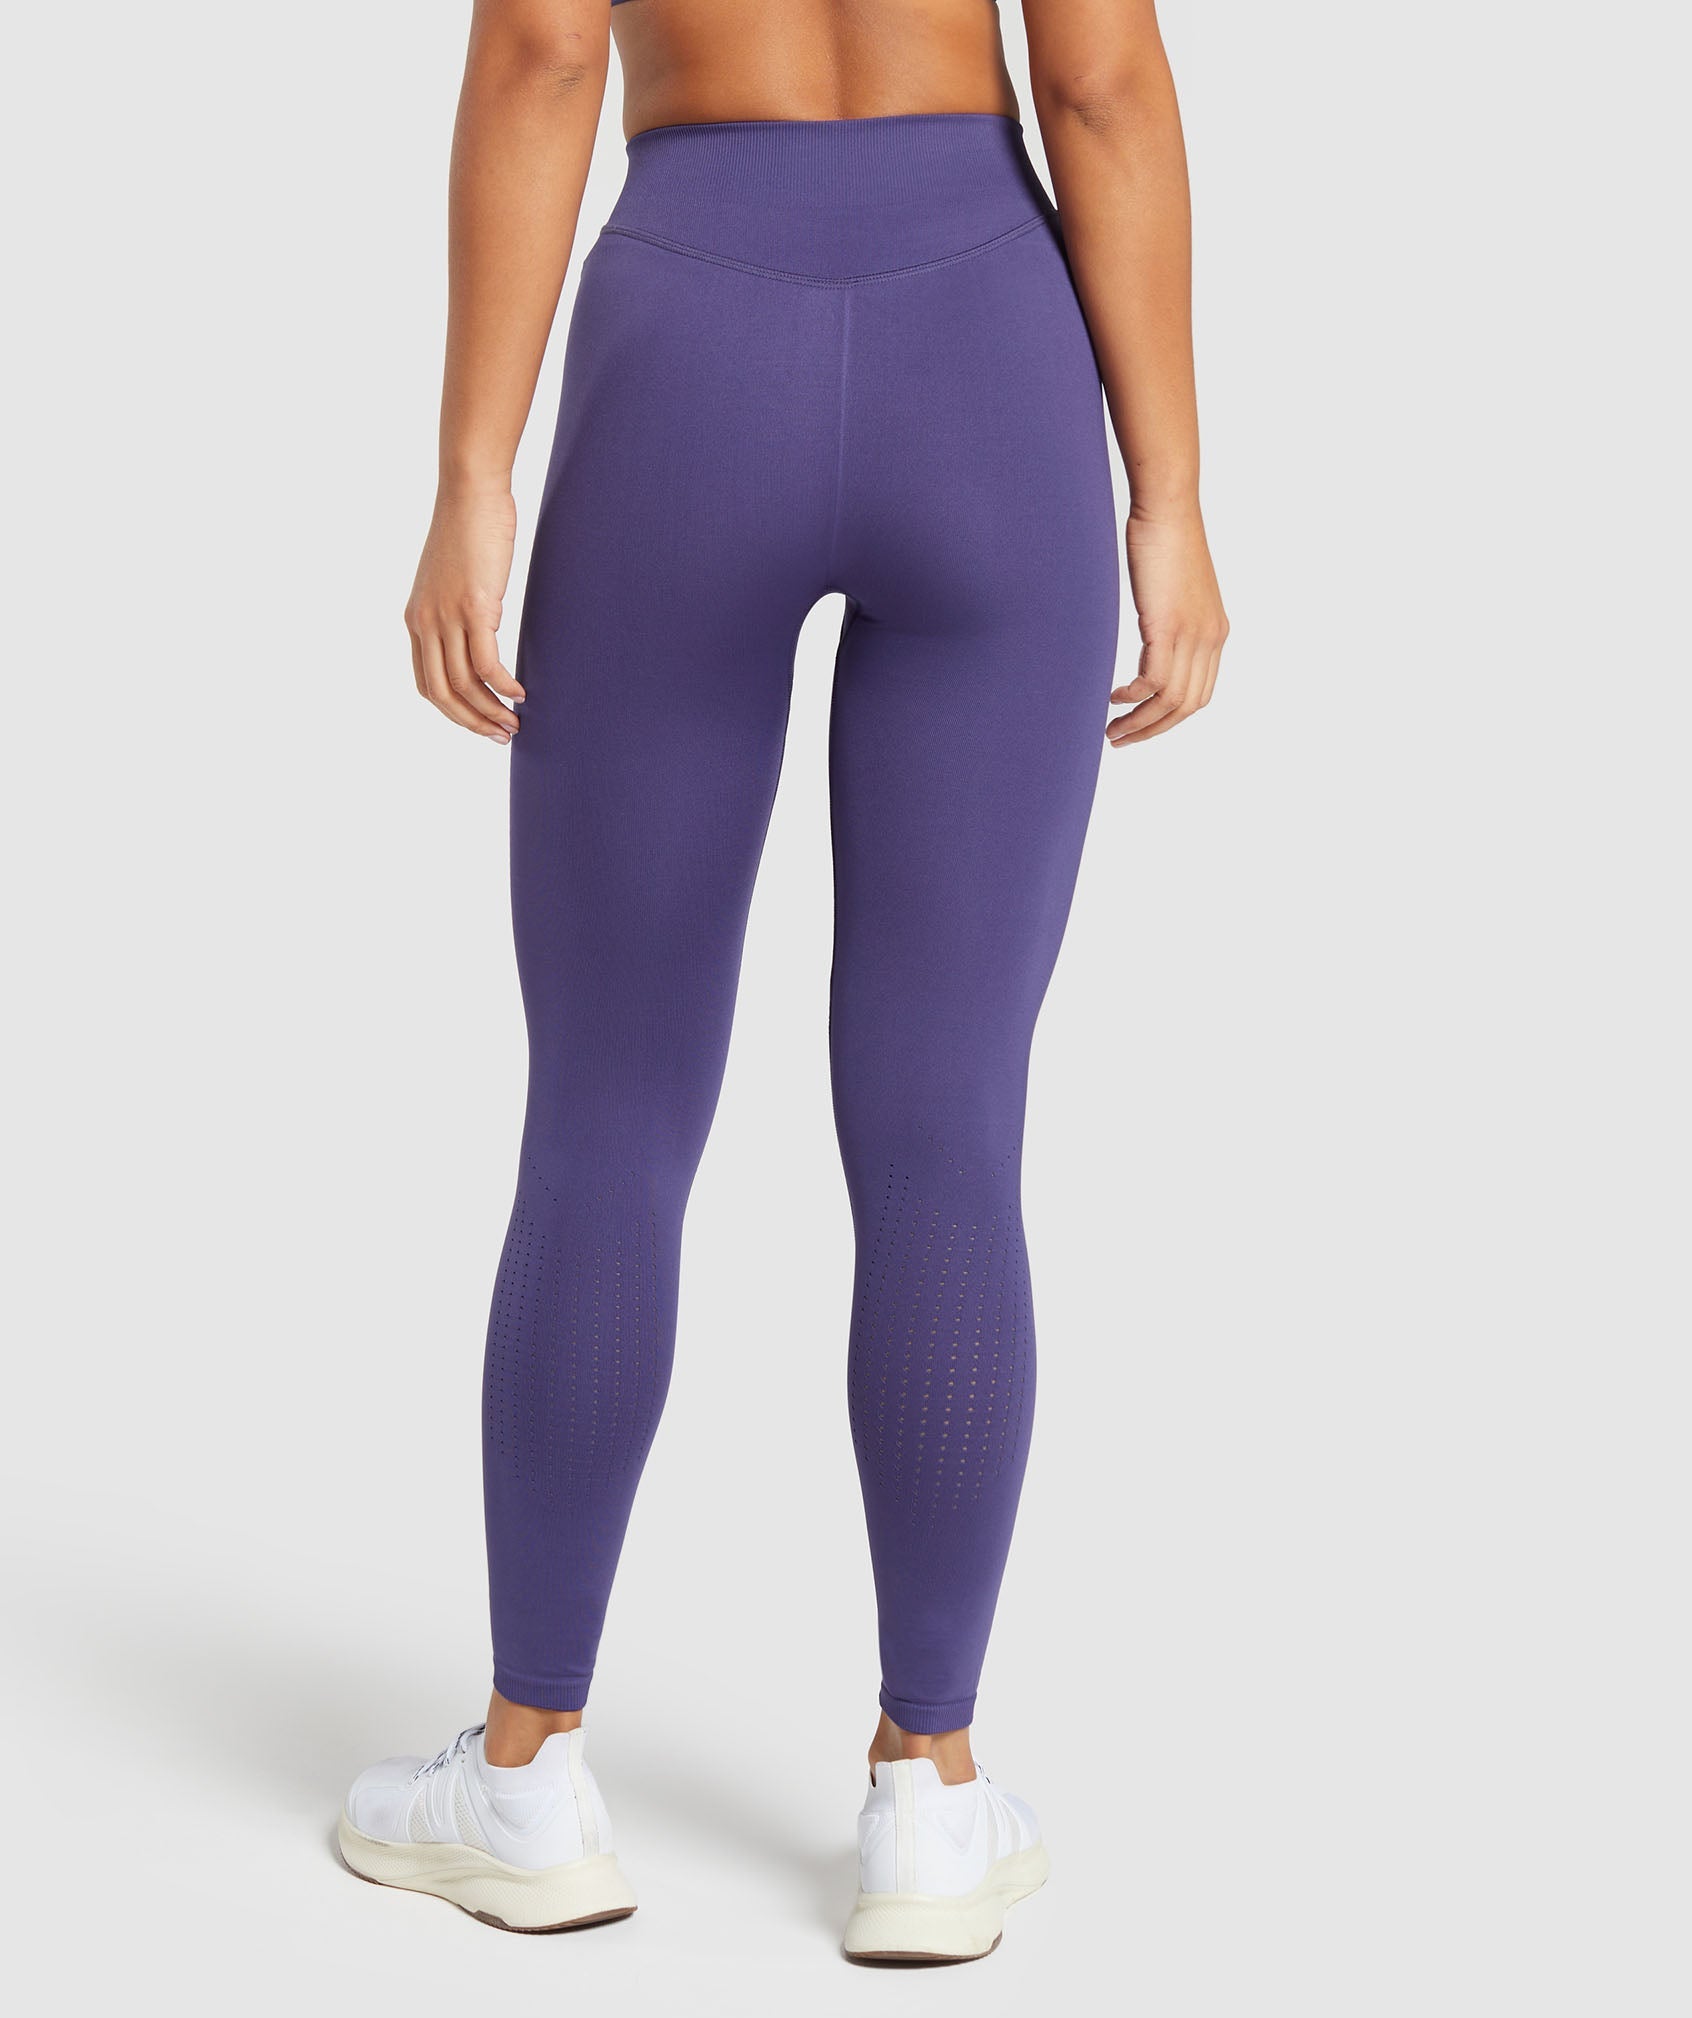 Rare Gym Shark 2 PC PurpleOmb Sport Bra & Leggings Pants Outfit XS Womens  Sz 0